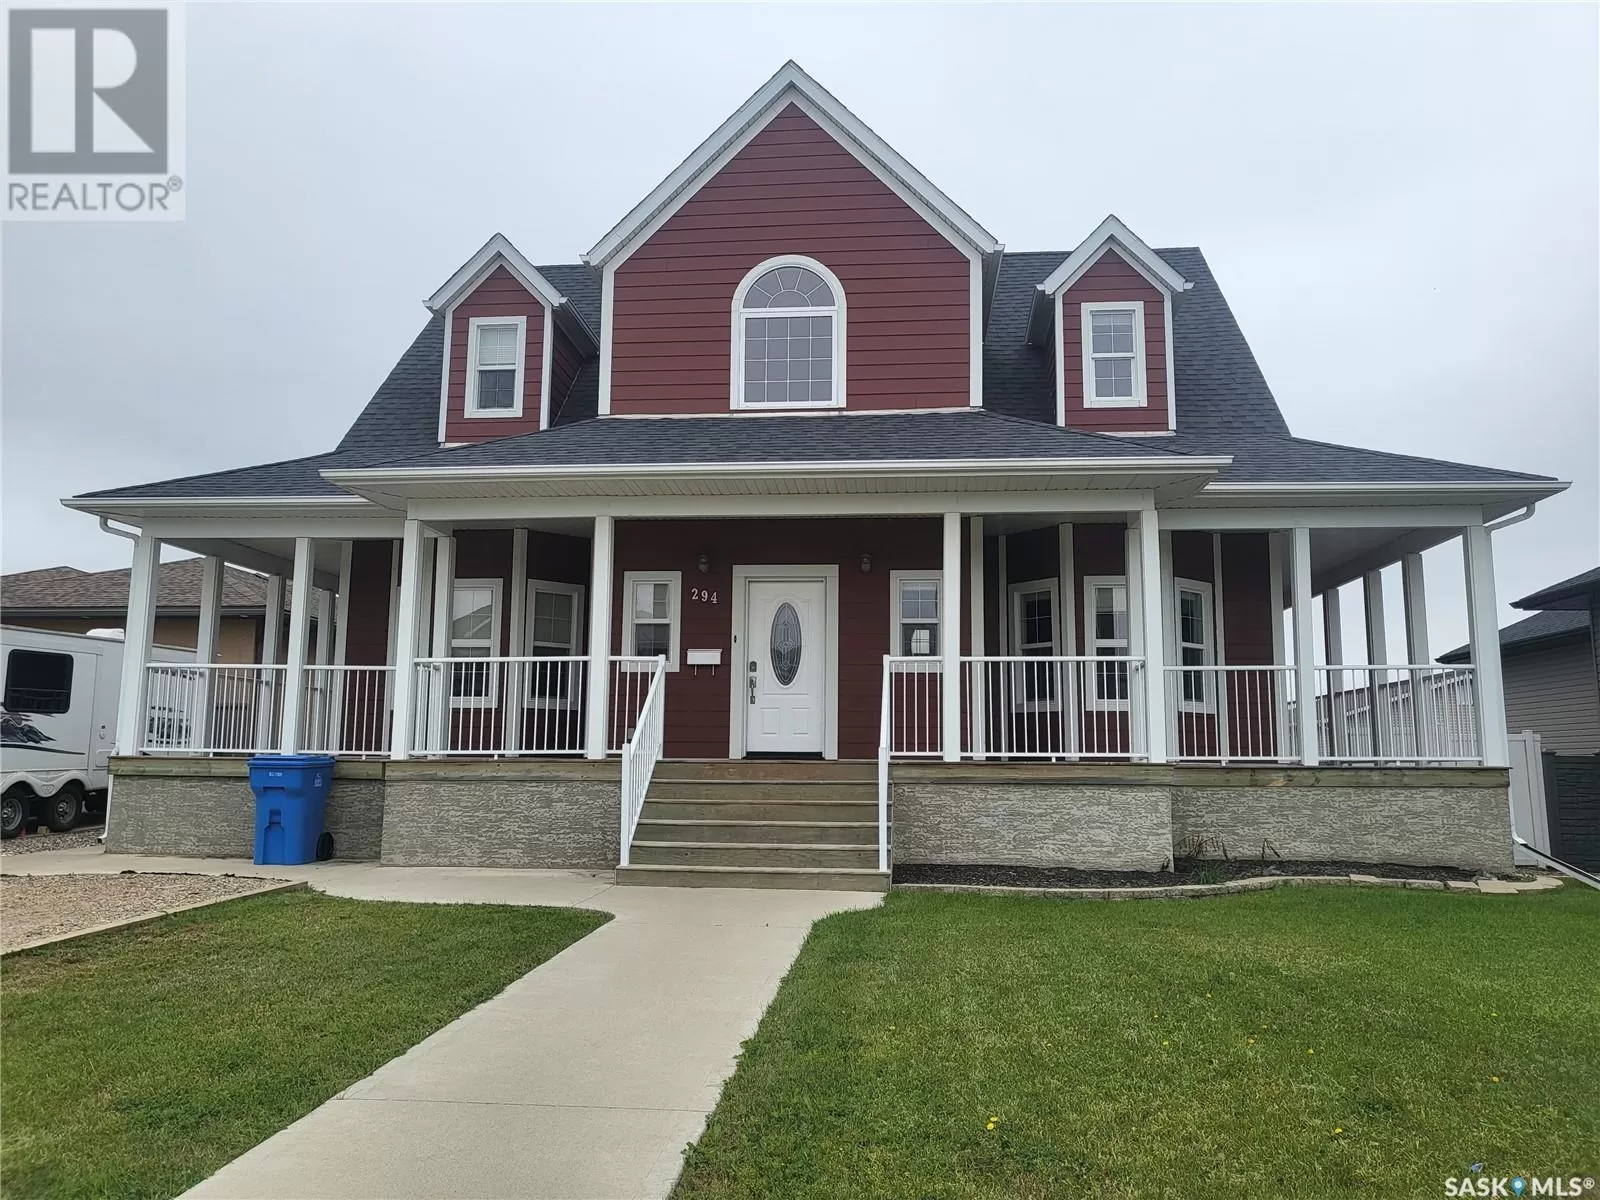 House for rent: 294 Symons Bay, Estevan, Saskatchewan S4A 0Y3